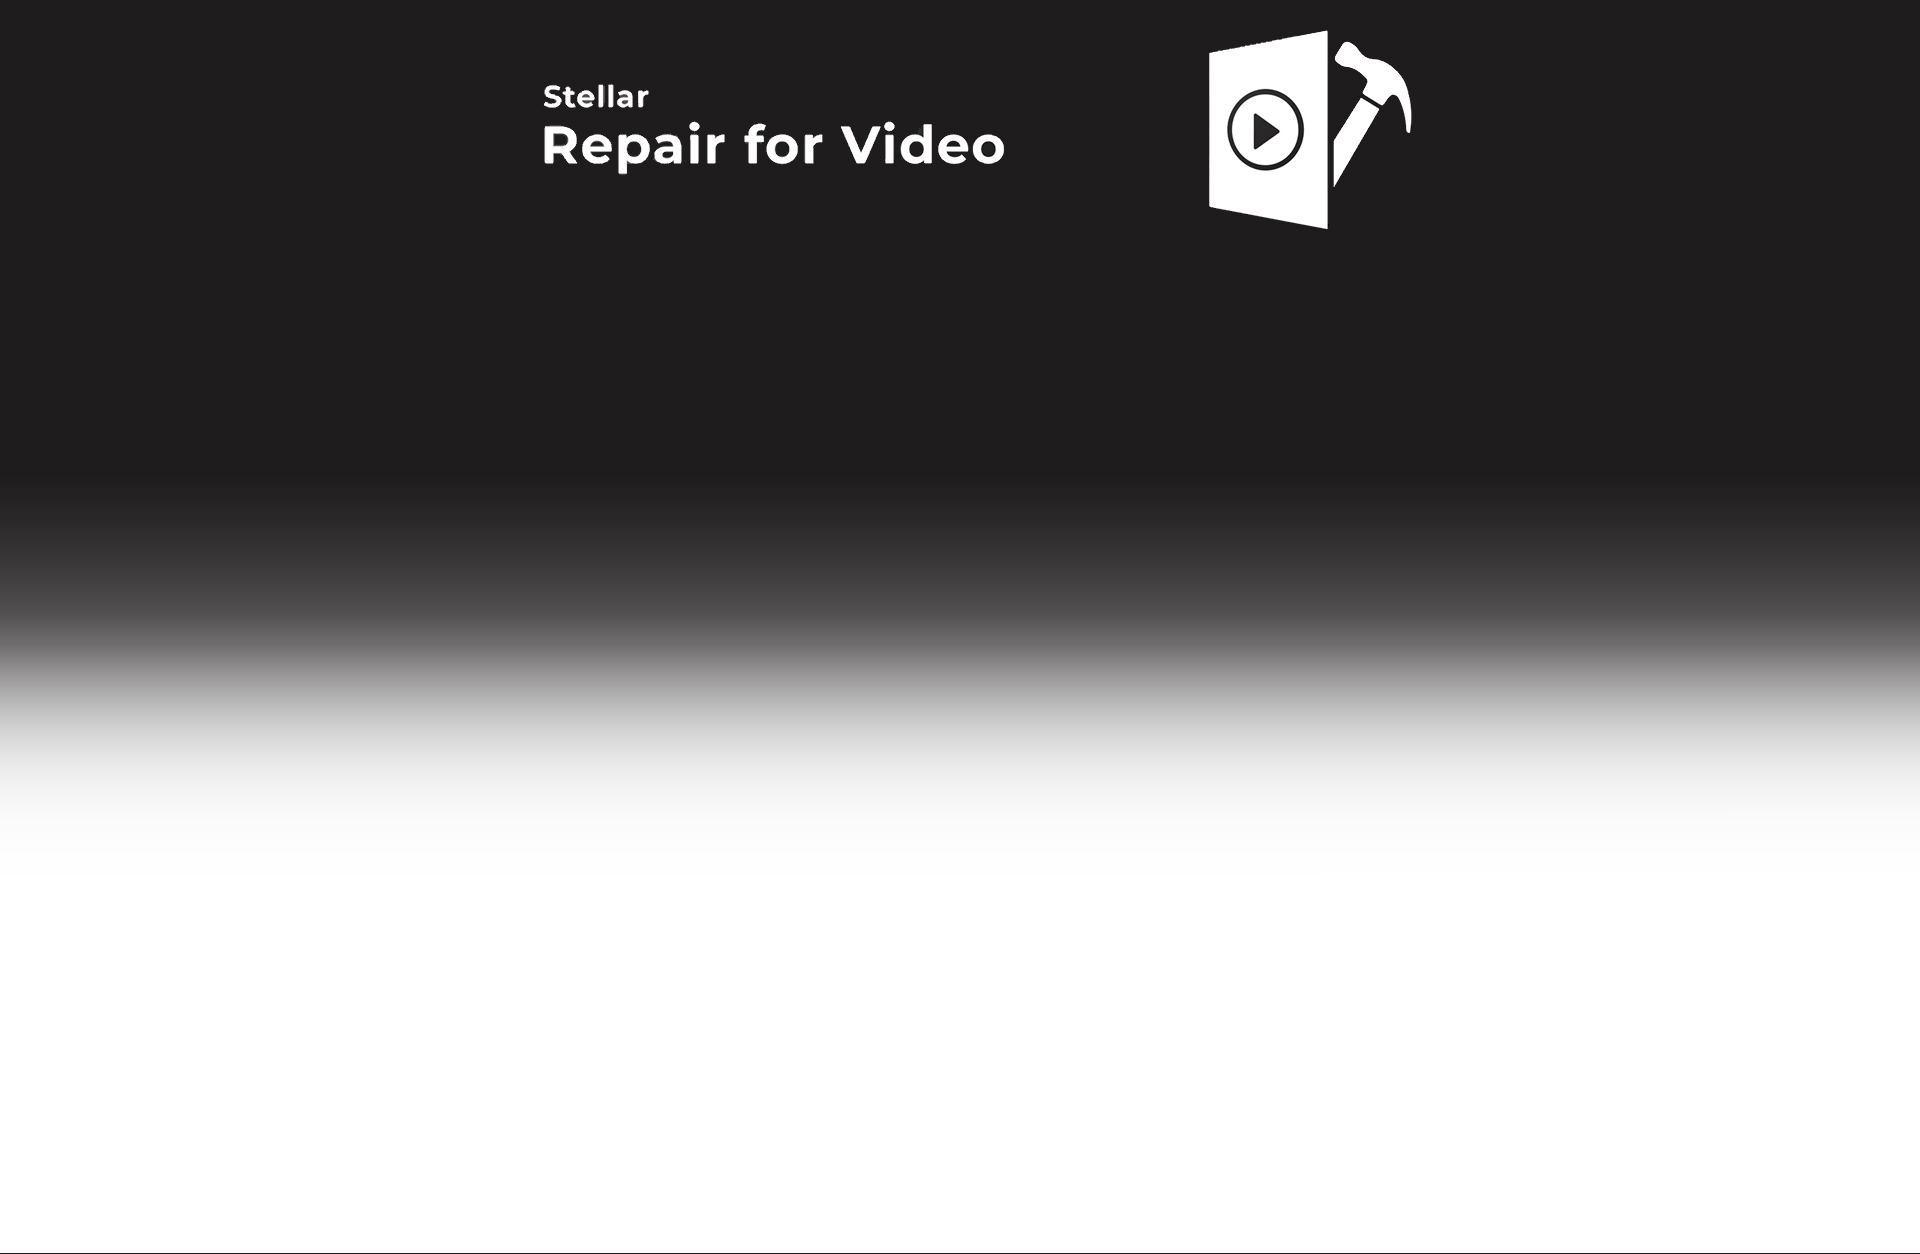 Stellar Repair for Video V4.0